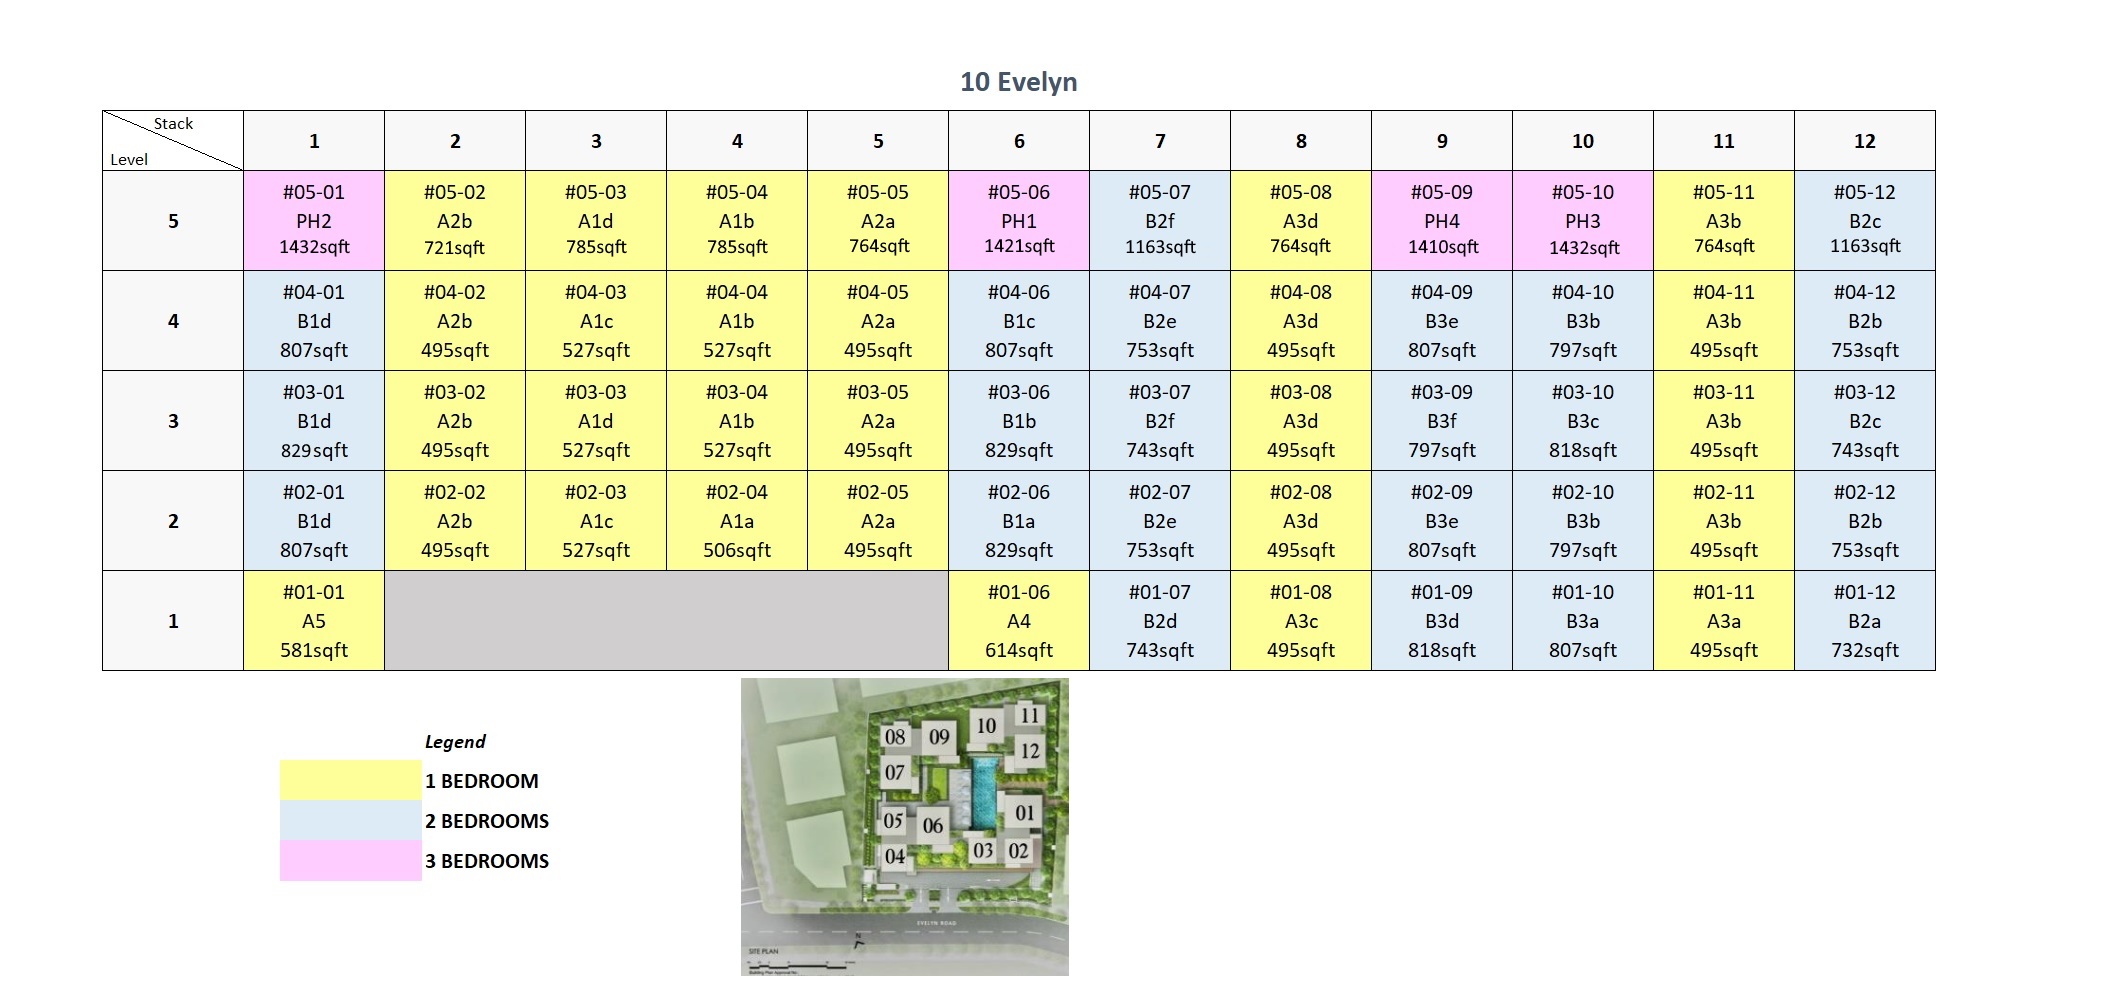 10 Evelyn site plan